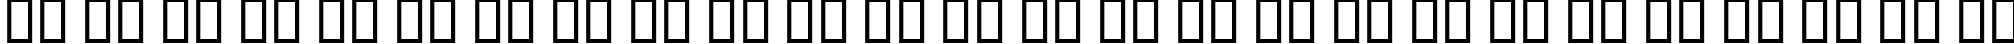 Пример написания английского алфавита шрифтом B Elm Border